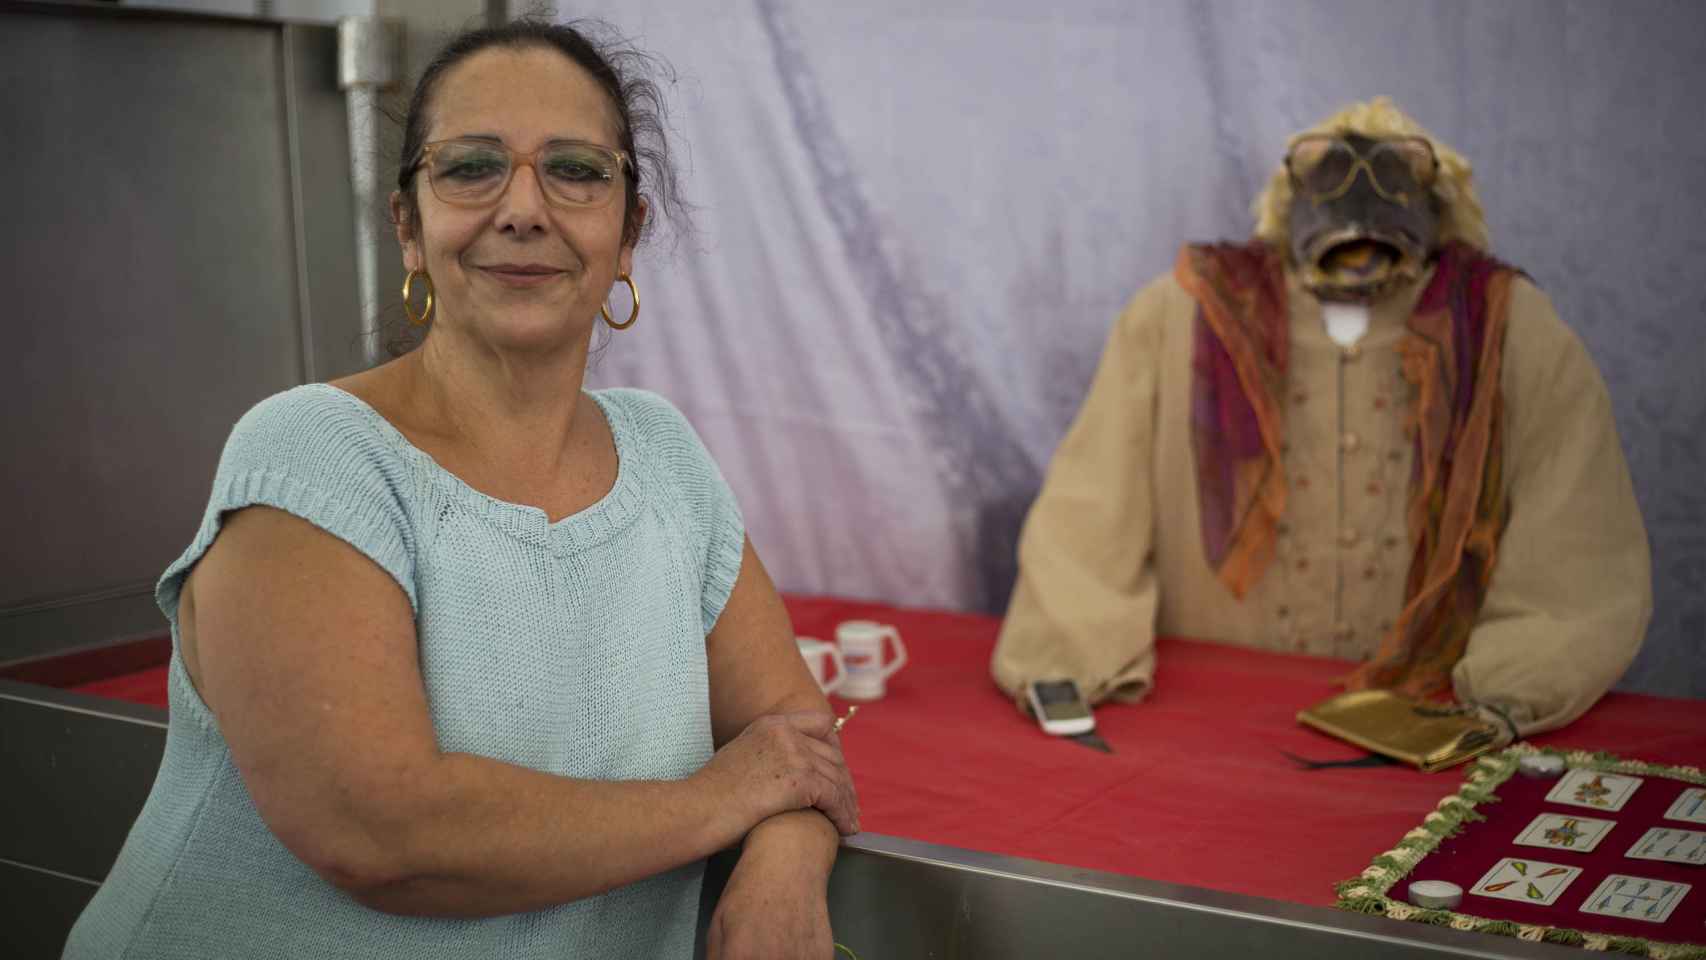 Lola Porquicho, pescadera de la plaza de abastos de Cádiz.